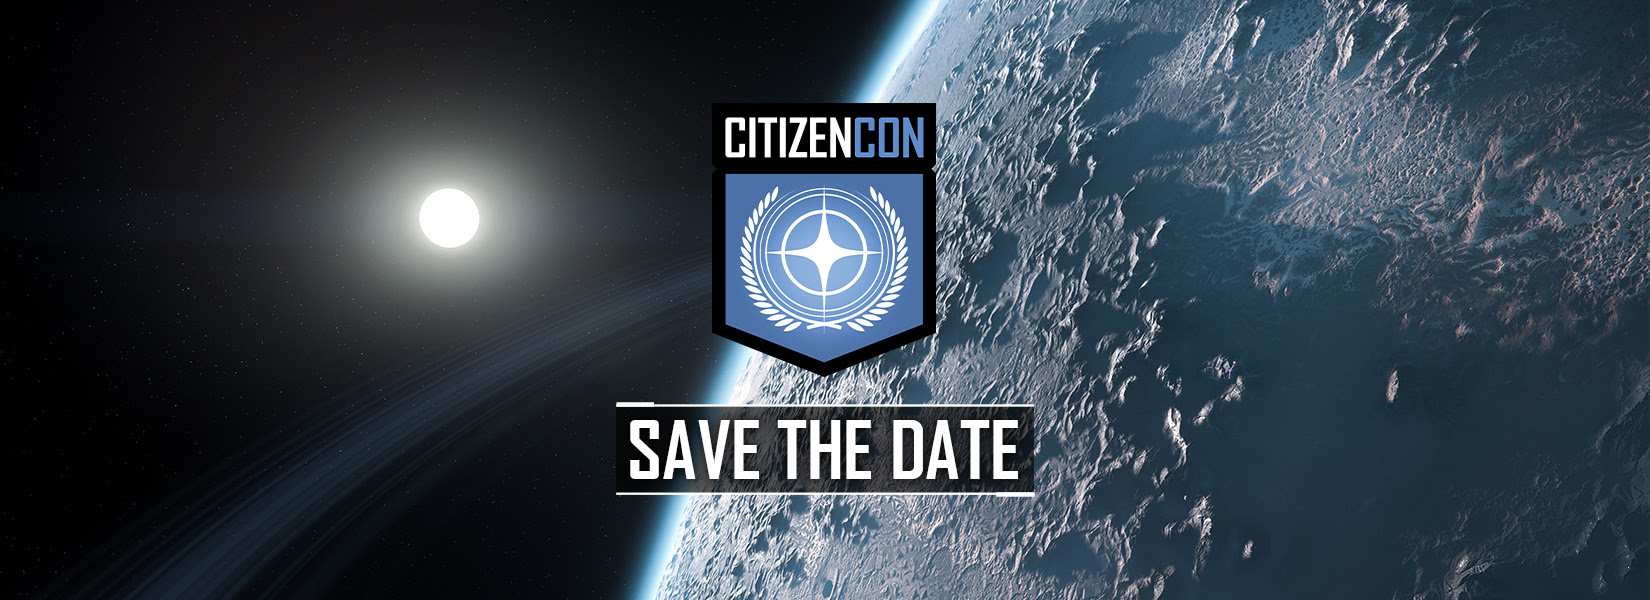 CitizenCon Banner